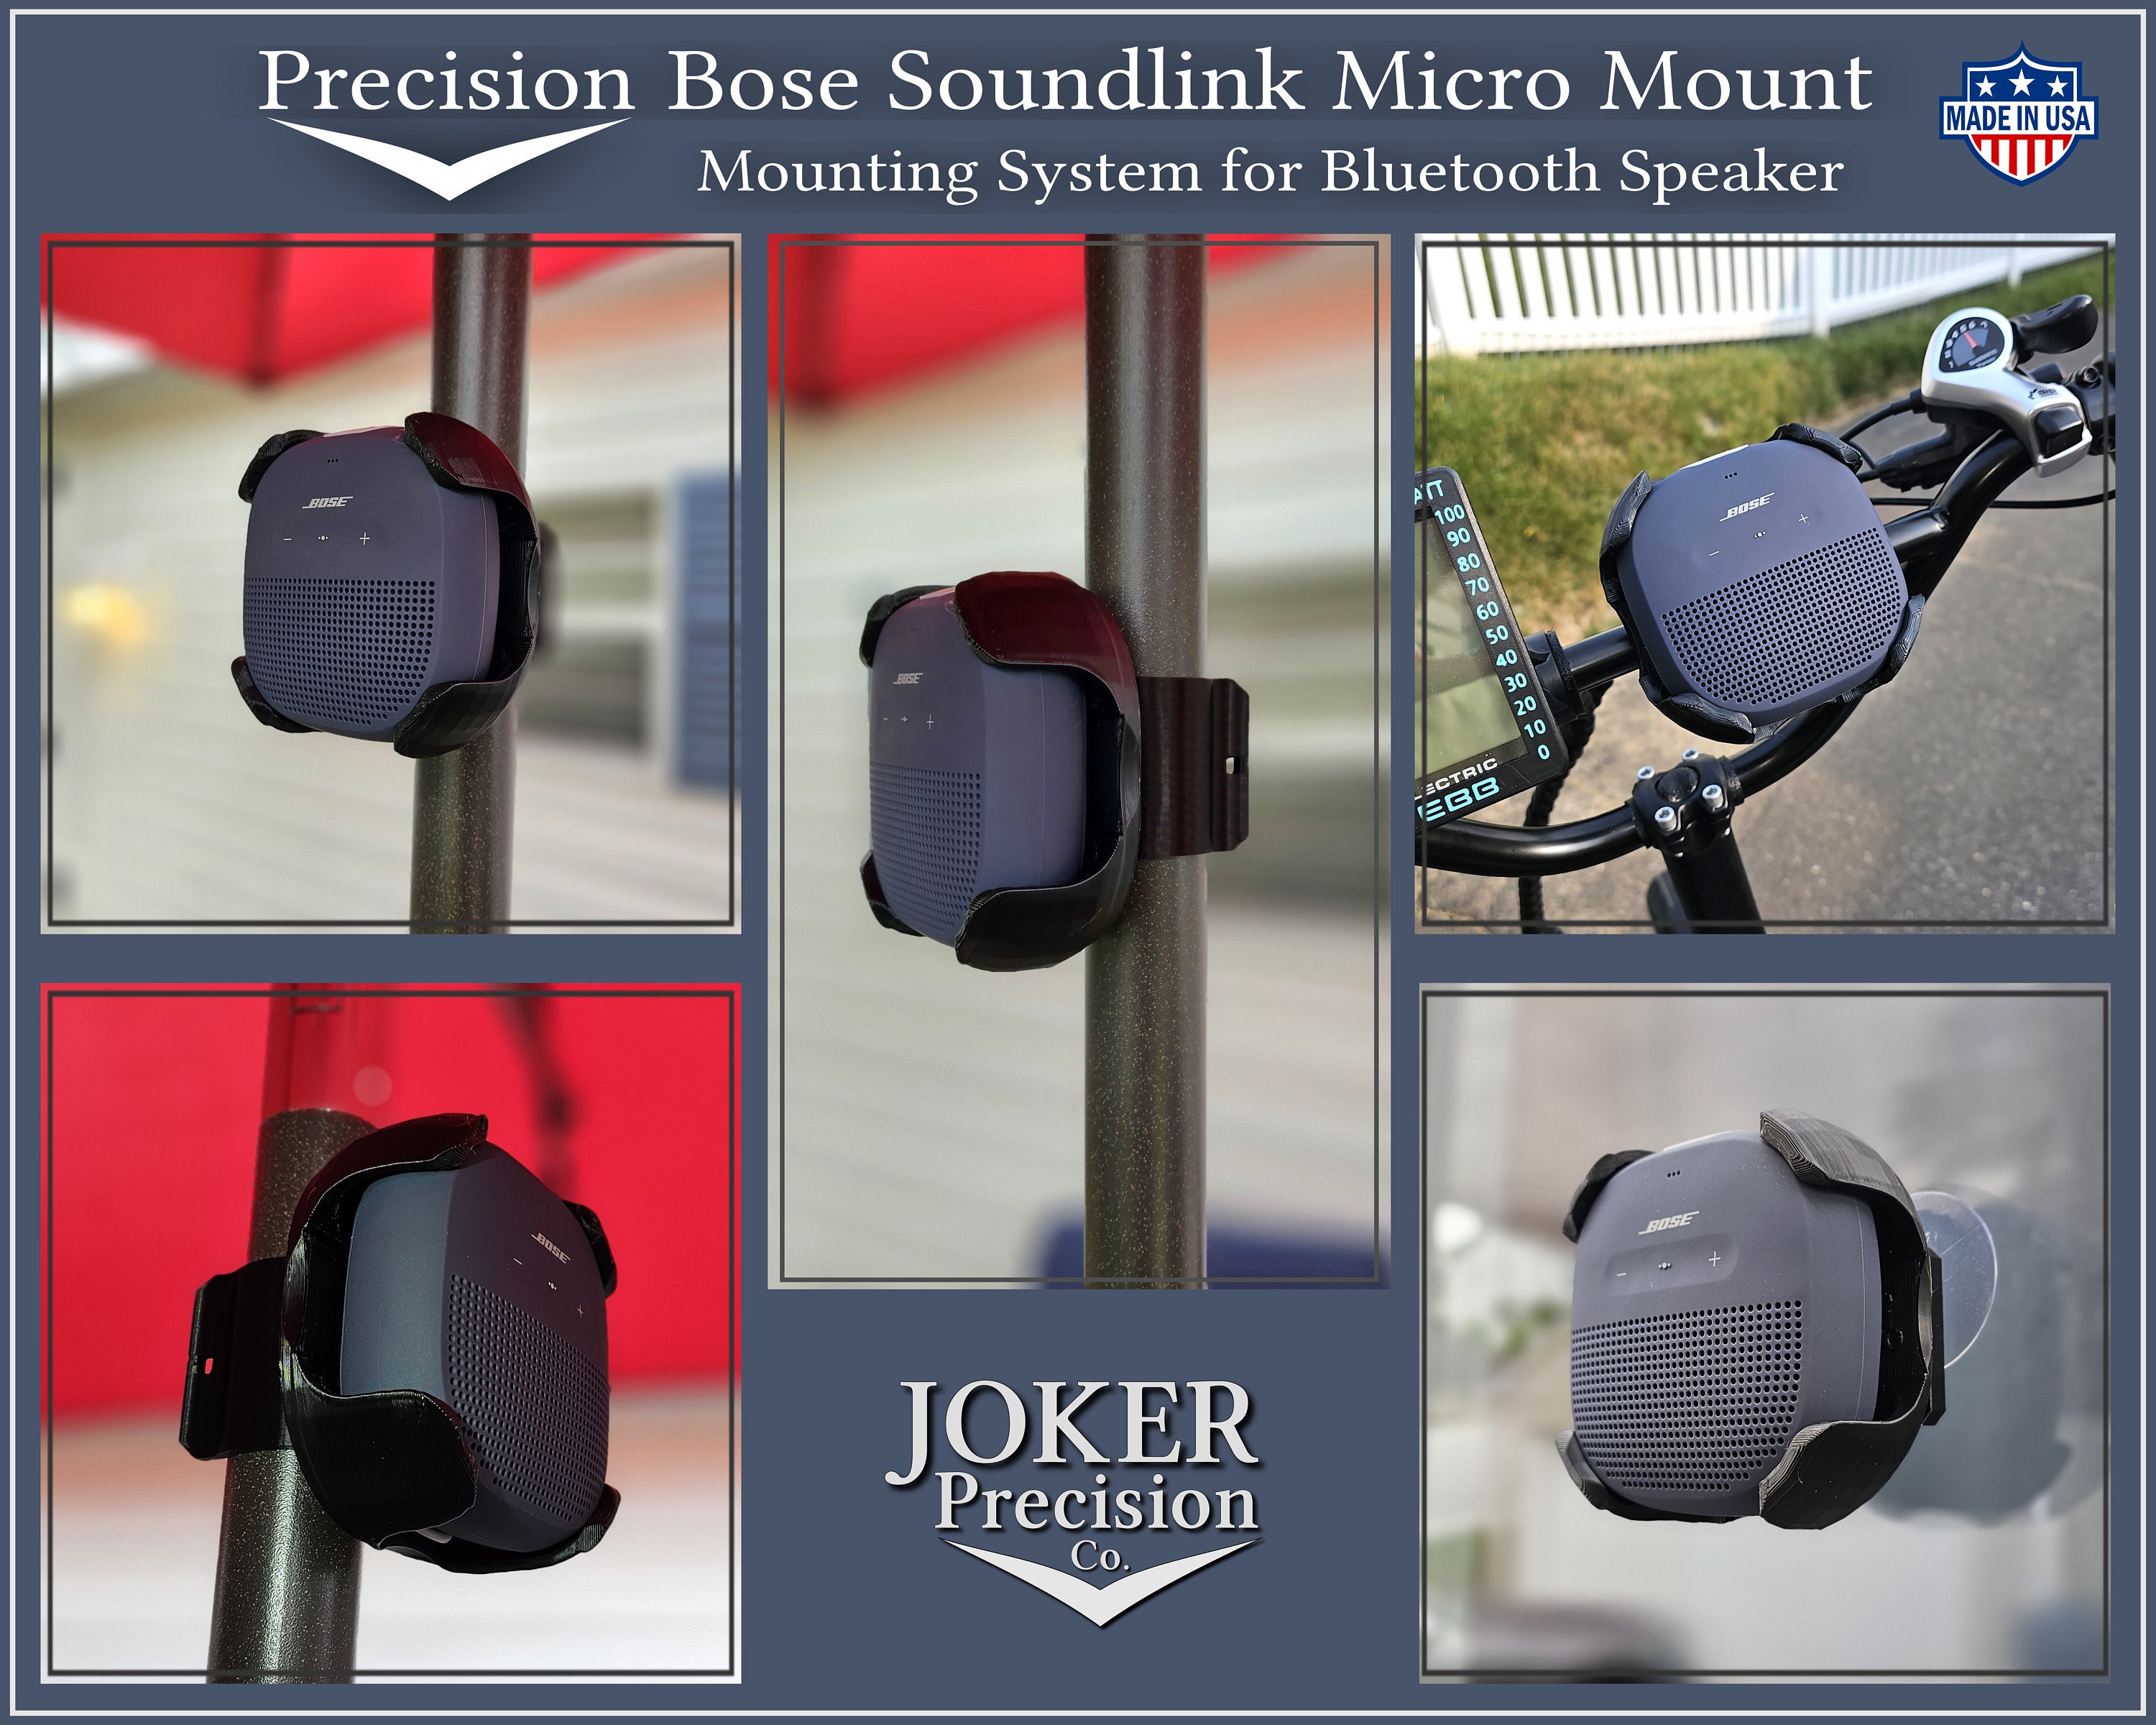 Parlante Bose Soundlink Micro con Bluetooth - Azul Piedra